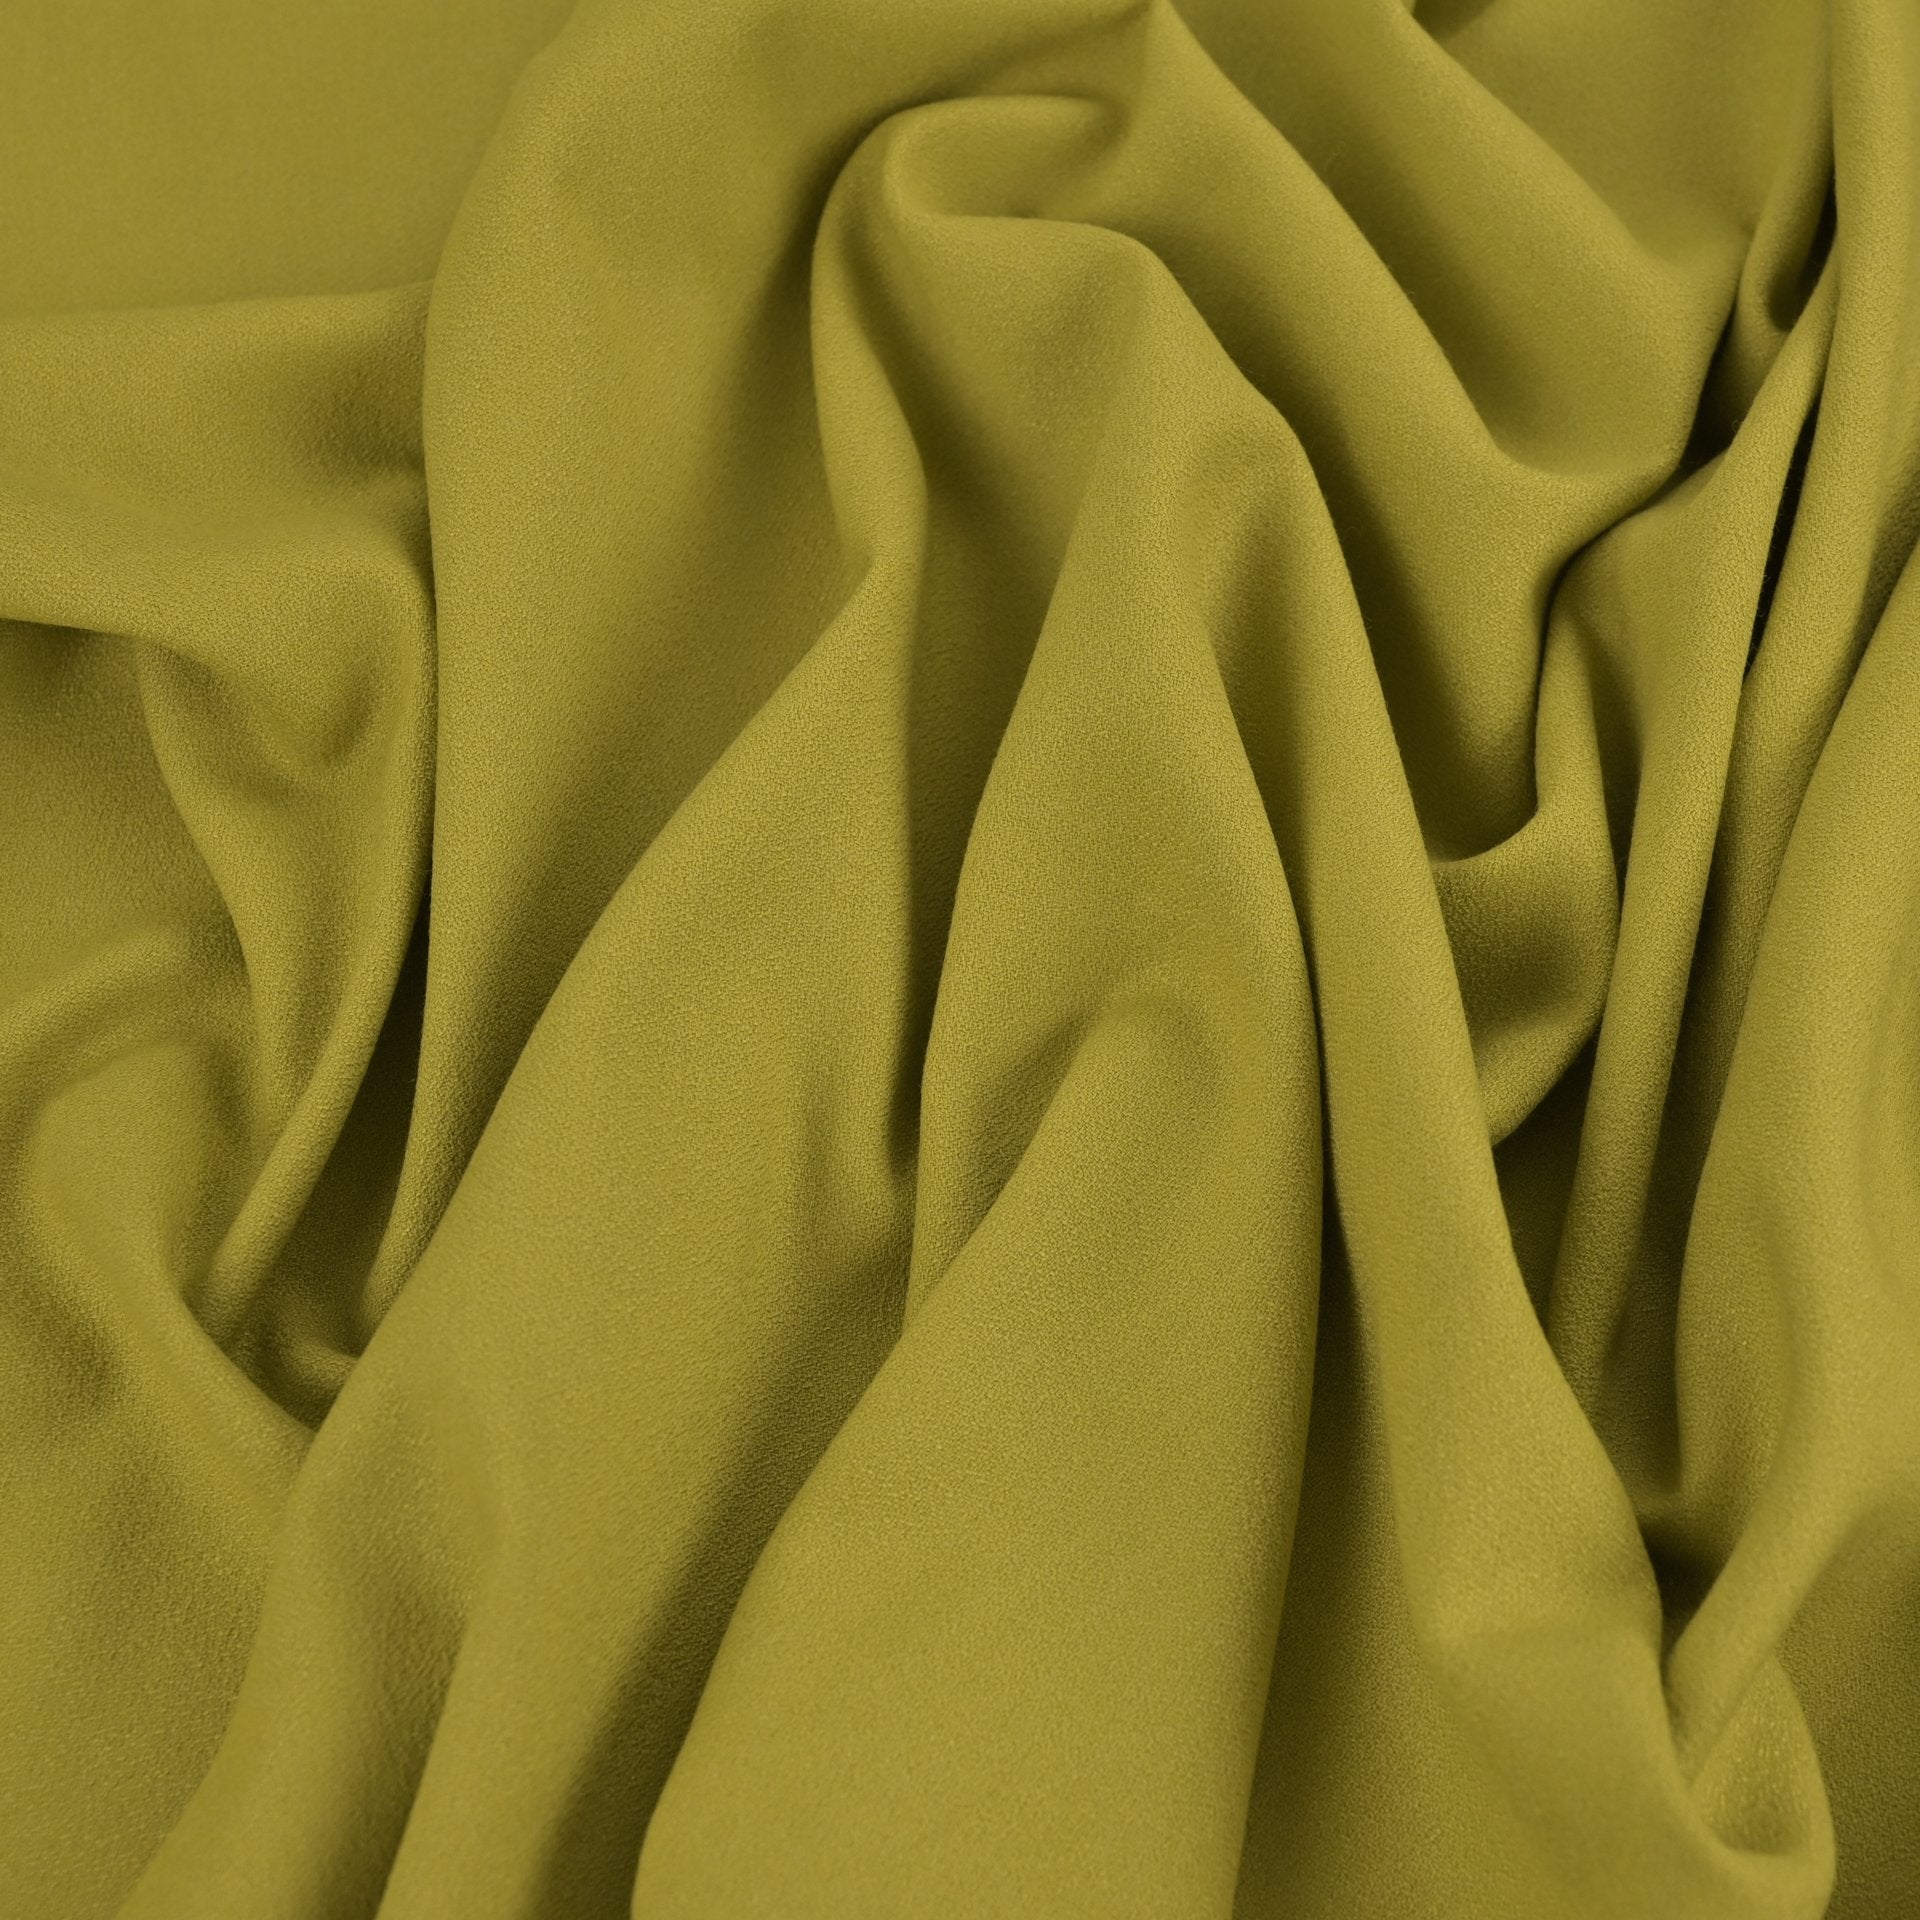 Grape Green Woollen Crepe Fabric 96433